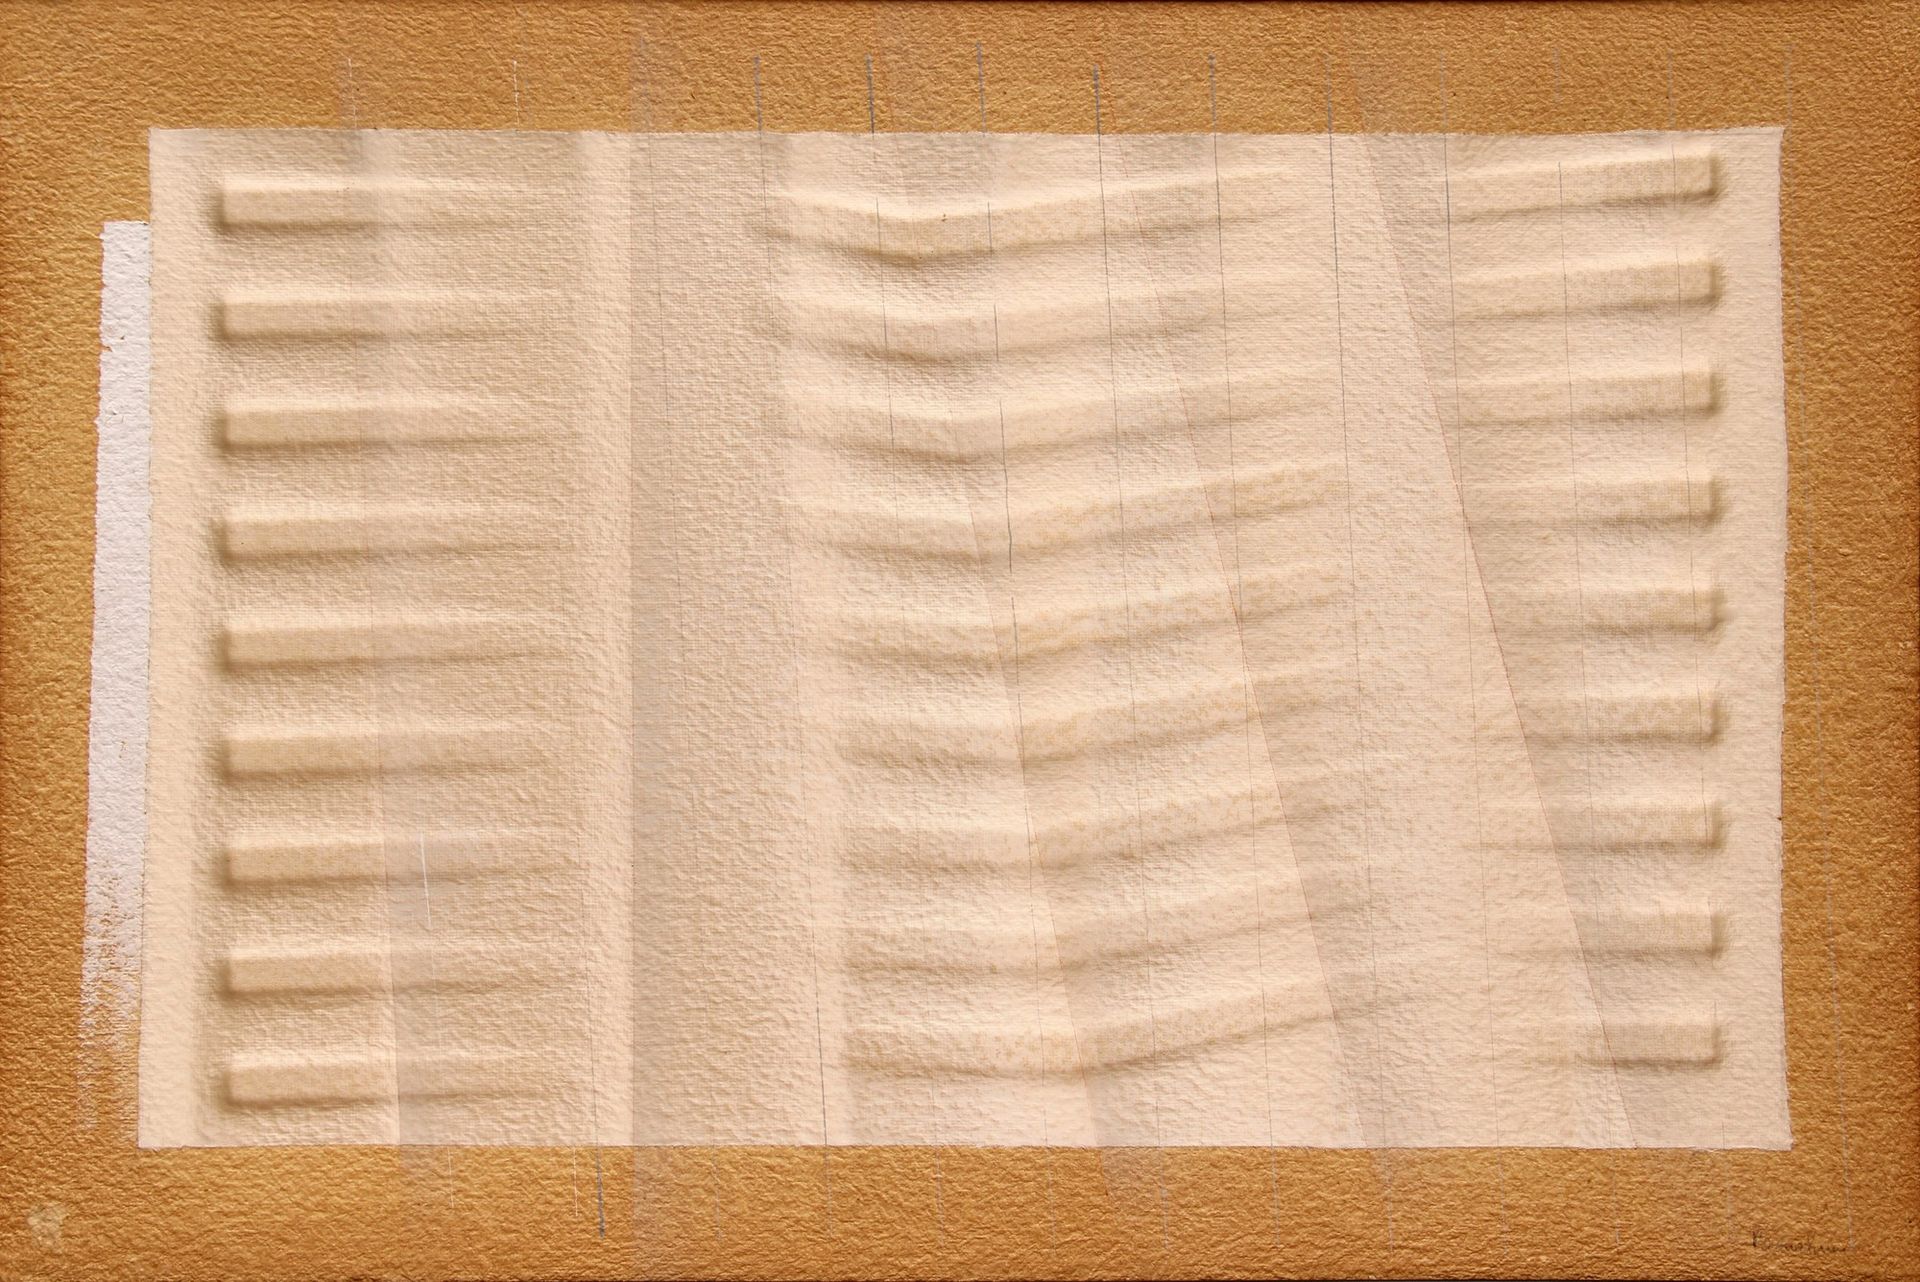 Agostino BONALUMI Bianco 1987年，结构化，纸上丝绸和墨水手绘在画布上，厘米，58x88

由艺术家颁发的证书